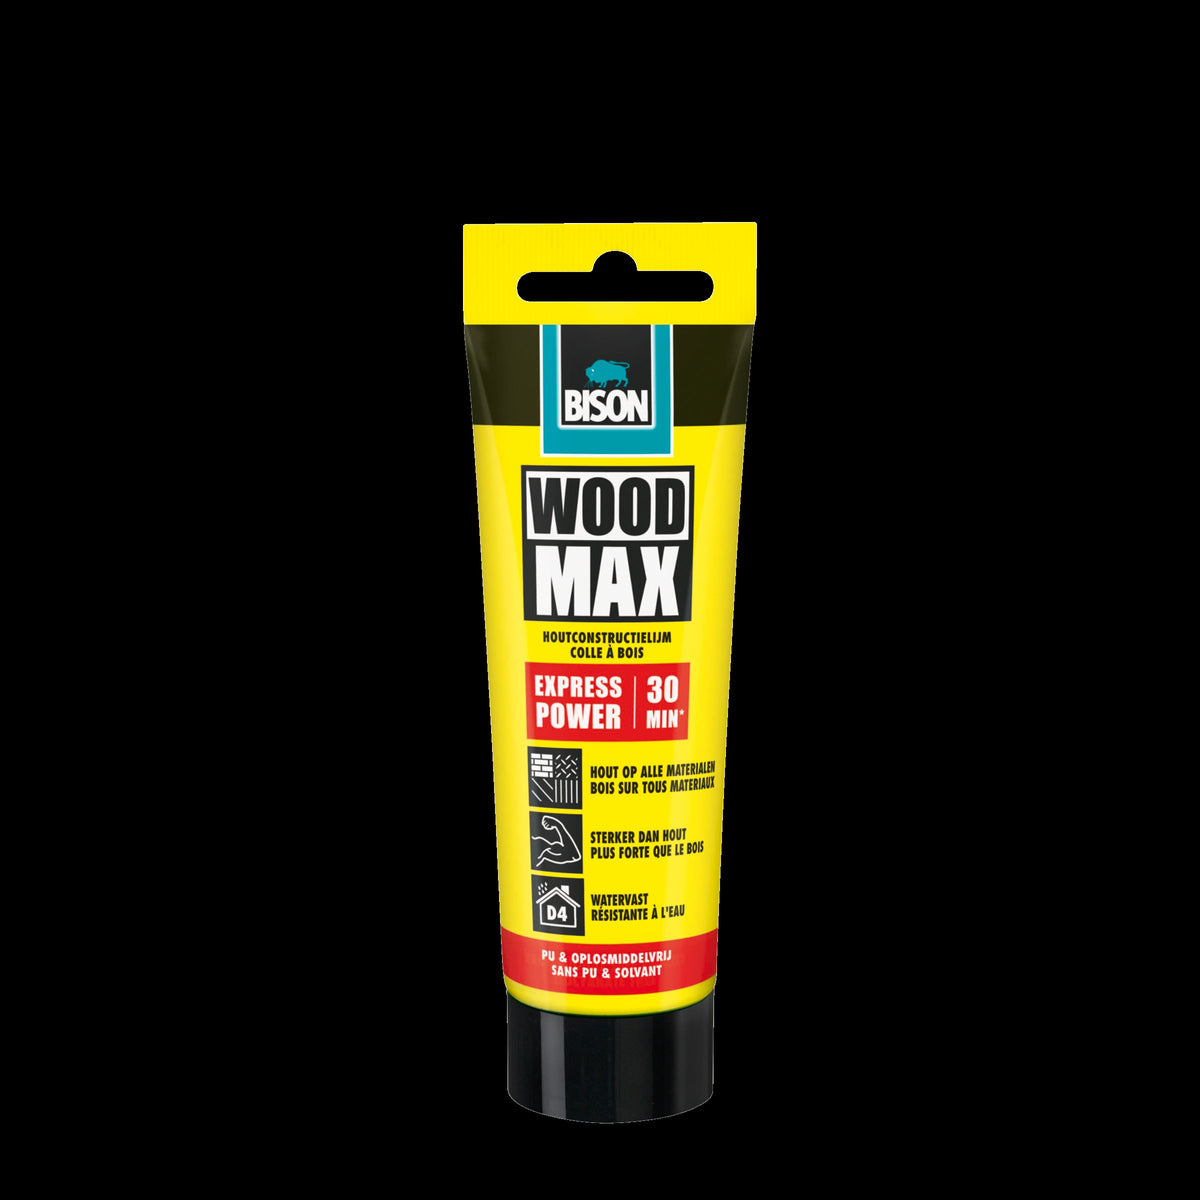 Bison wood max express tube 100g